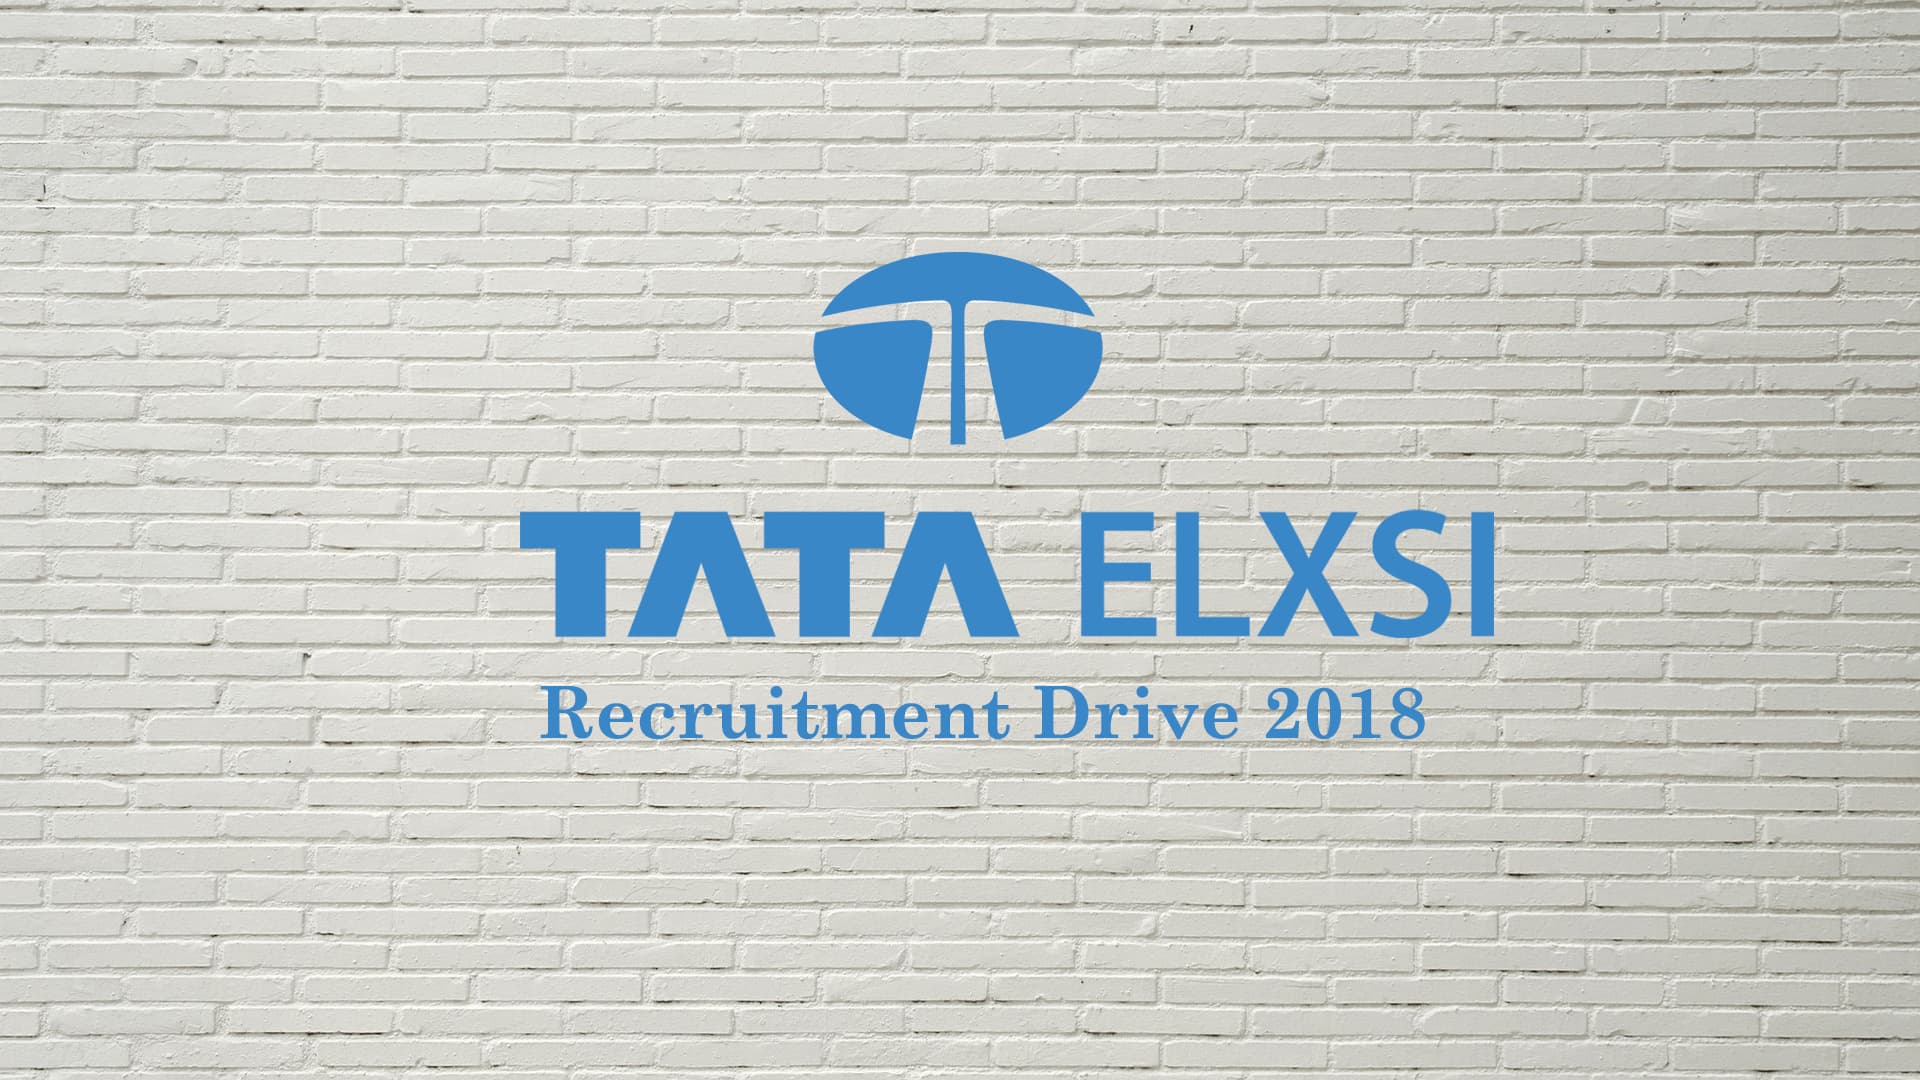 TATA ELXSI Recruitment Drive 2018